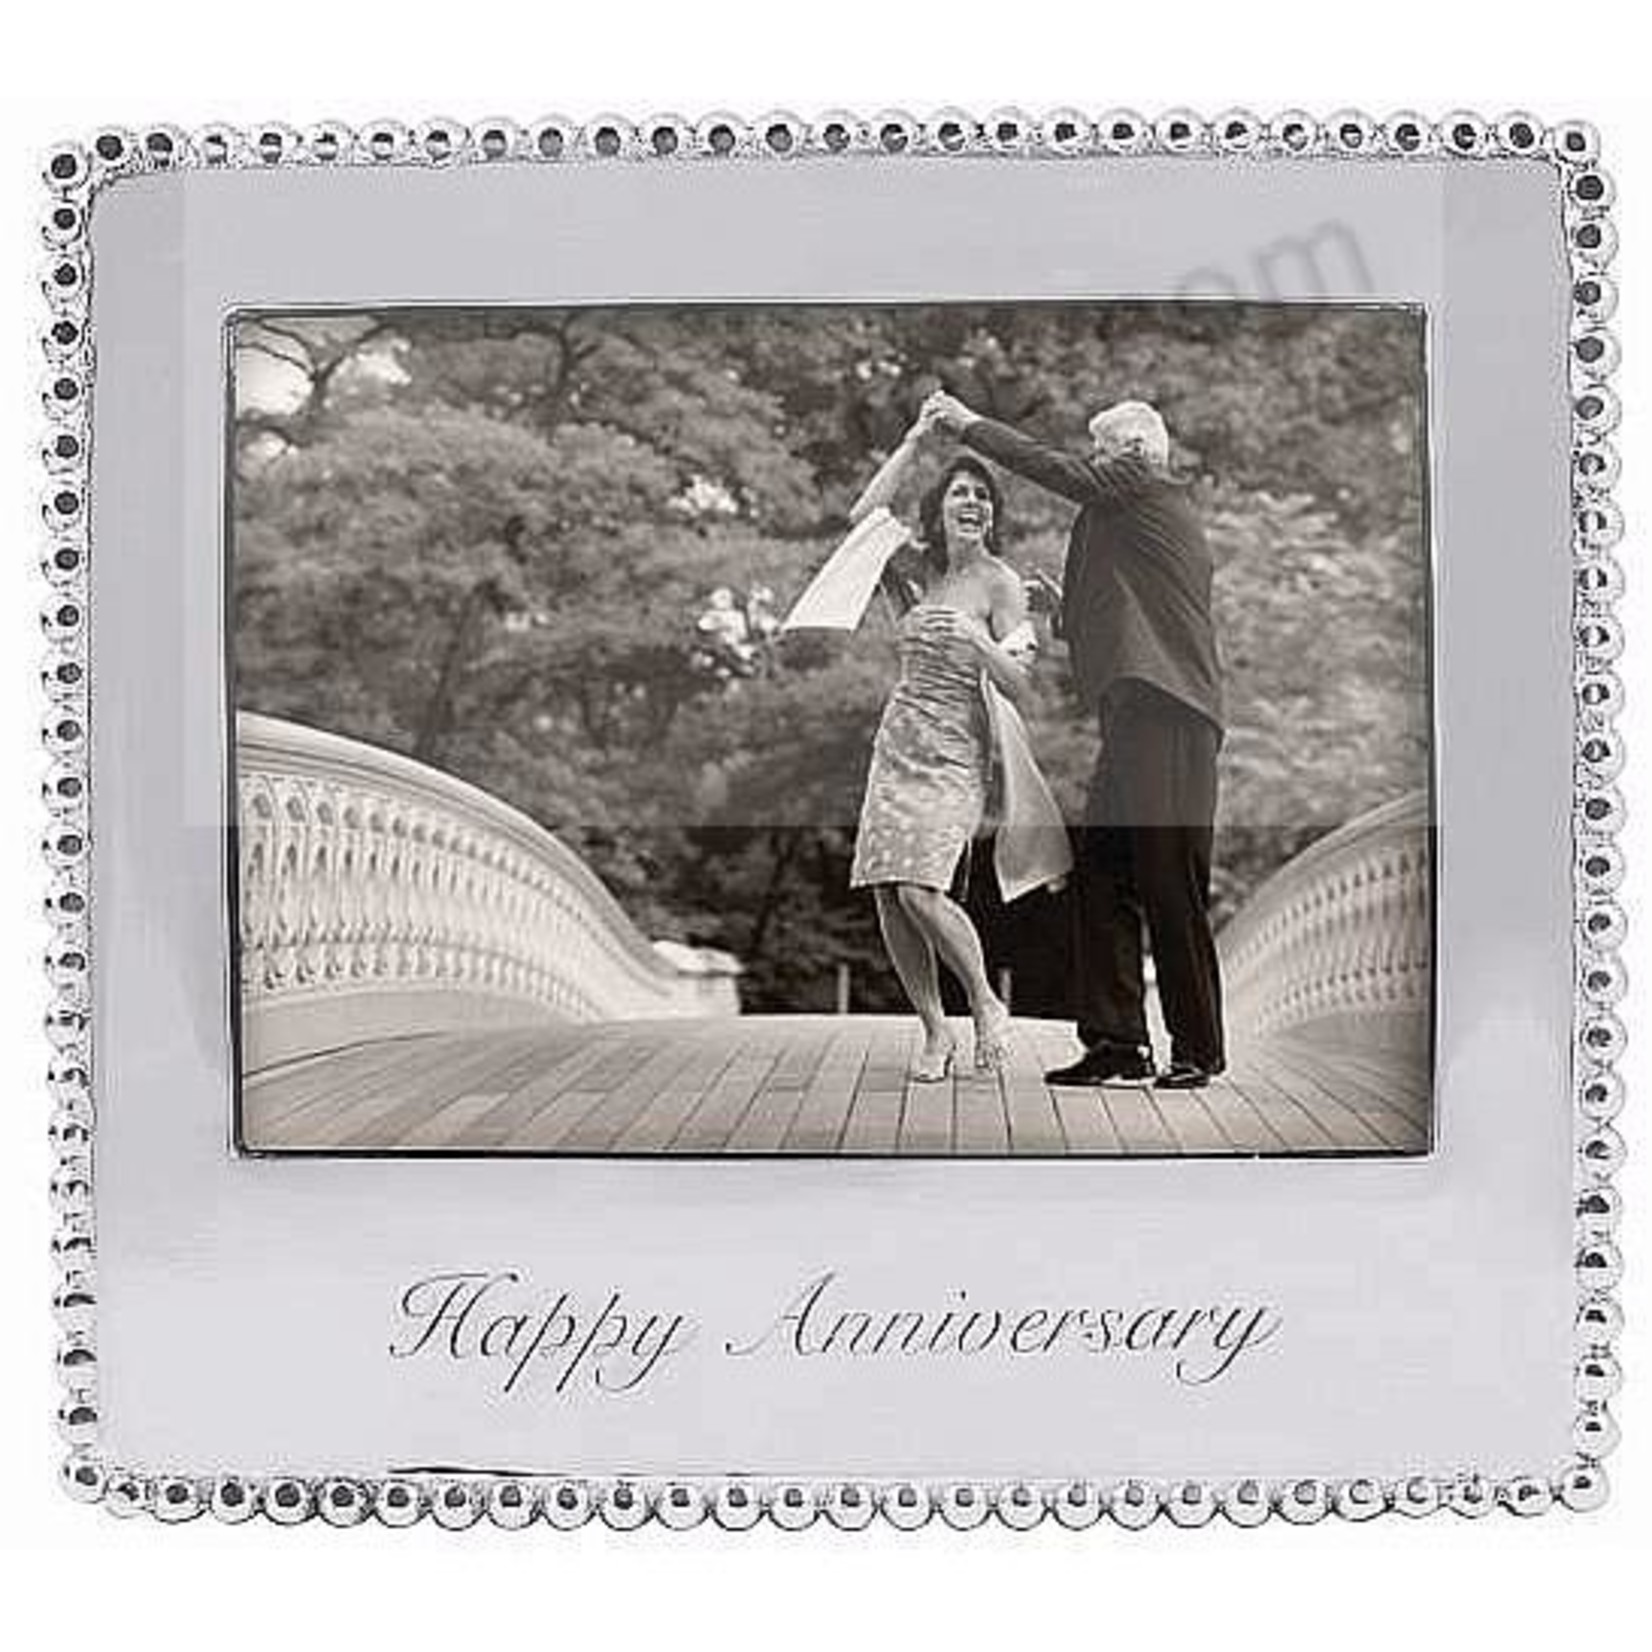 Mariposa Happy Anniversary Frame - 5x7